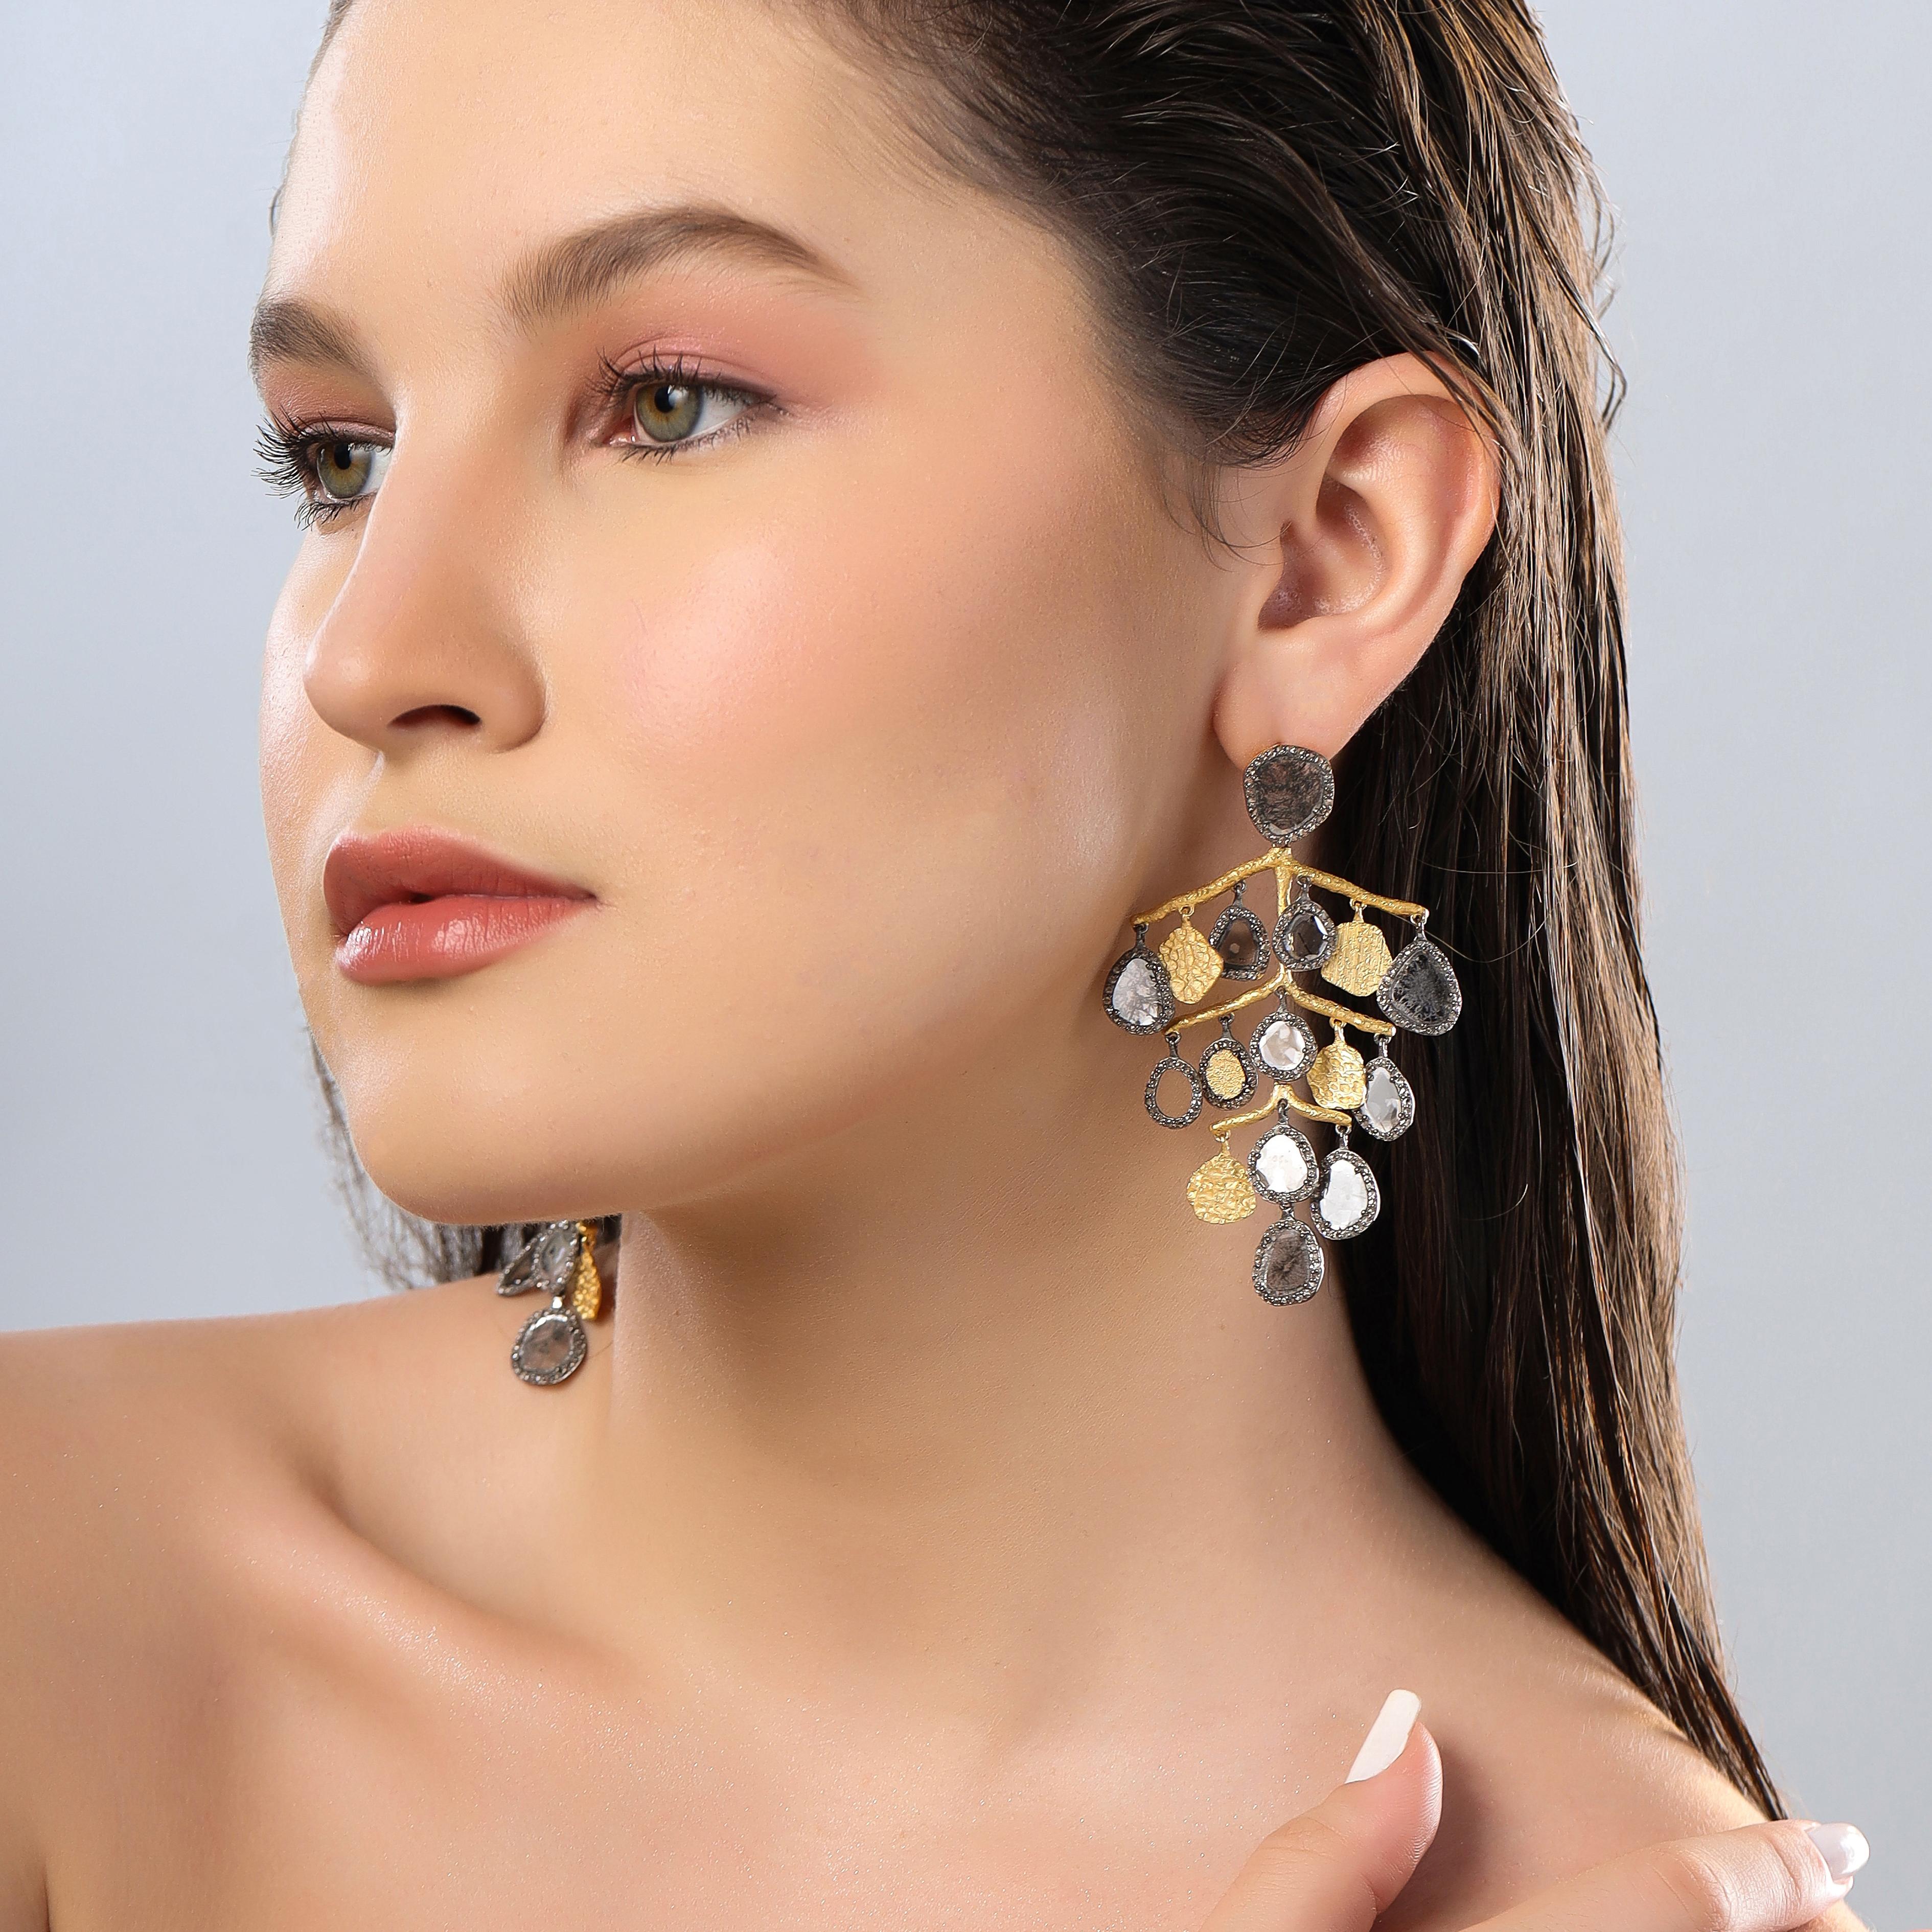 Modern A.deitiy silver earrings with flat diamonds & 3-micron gold & rhodium plating 